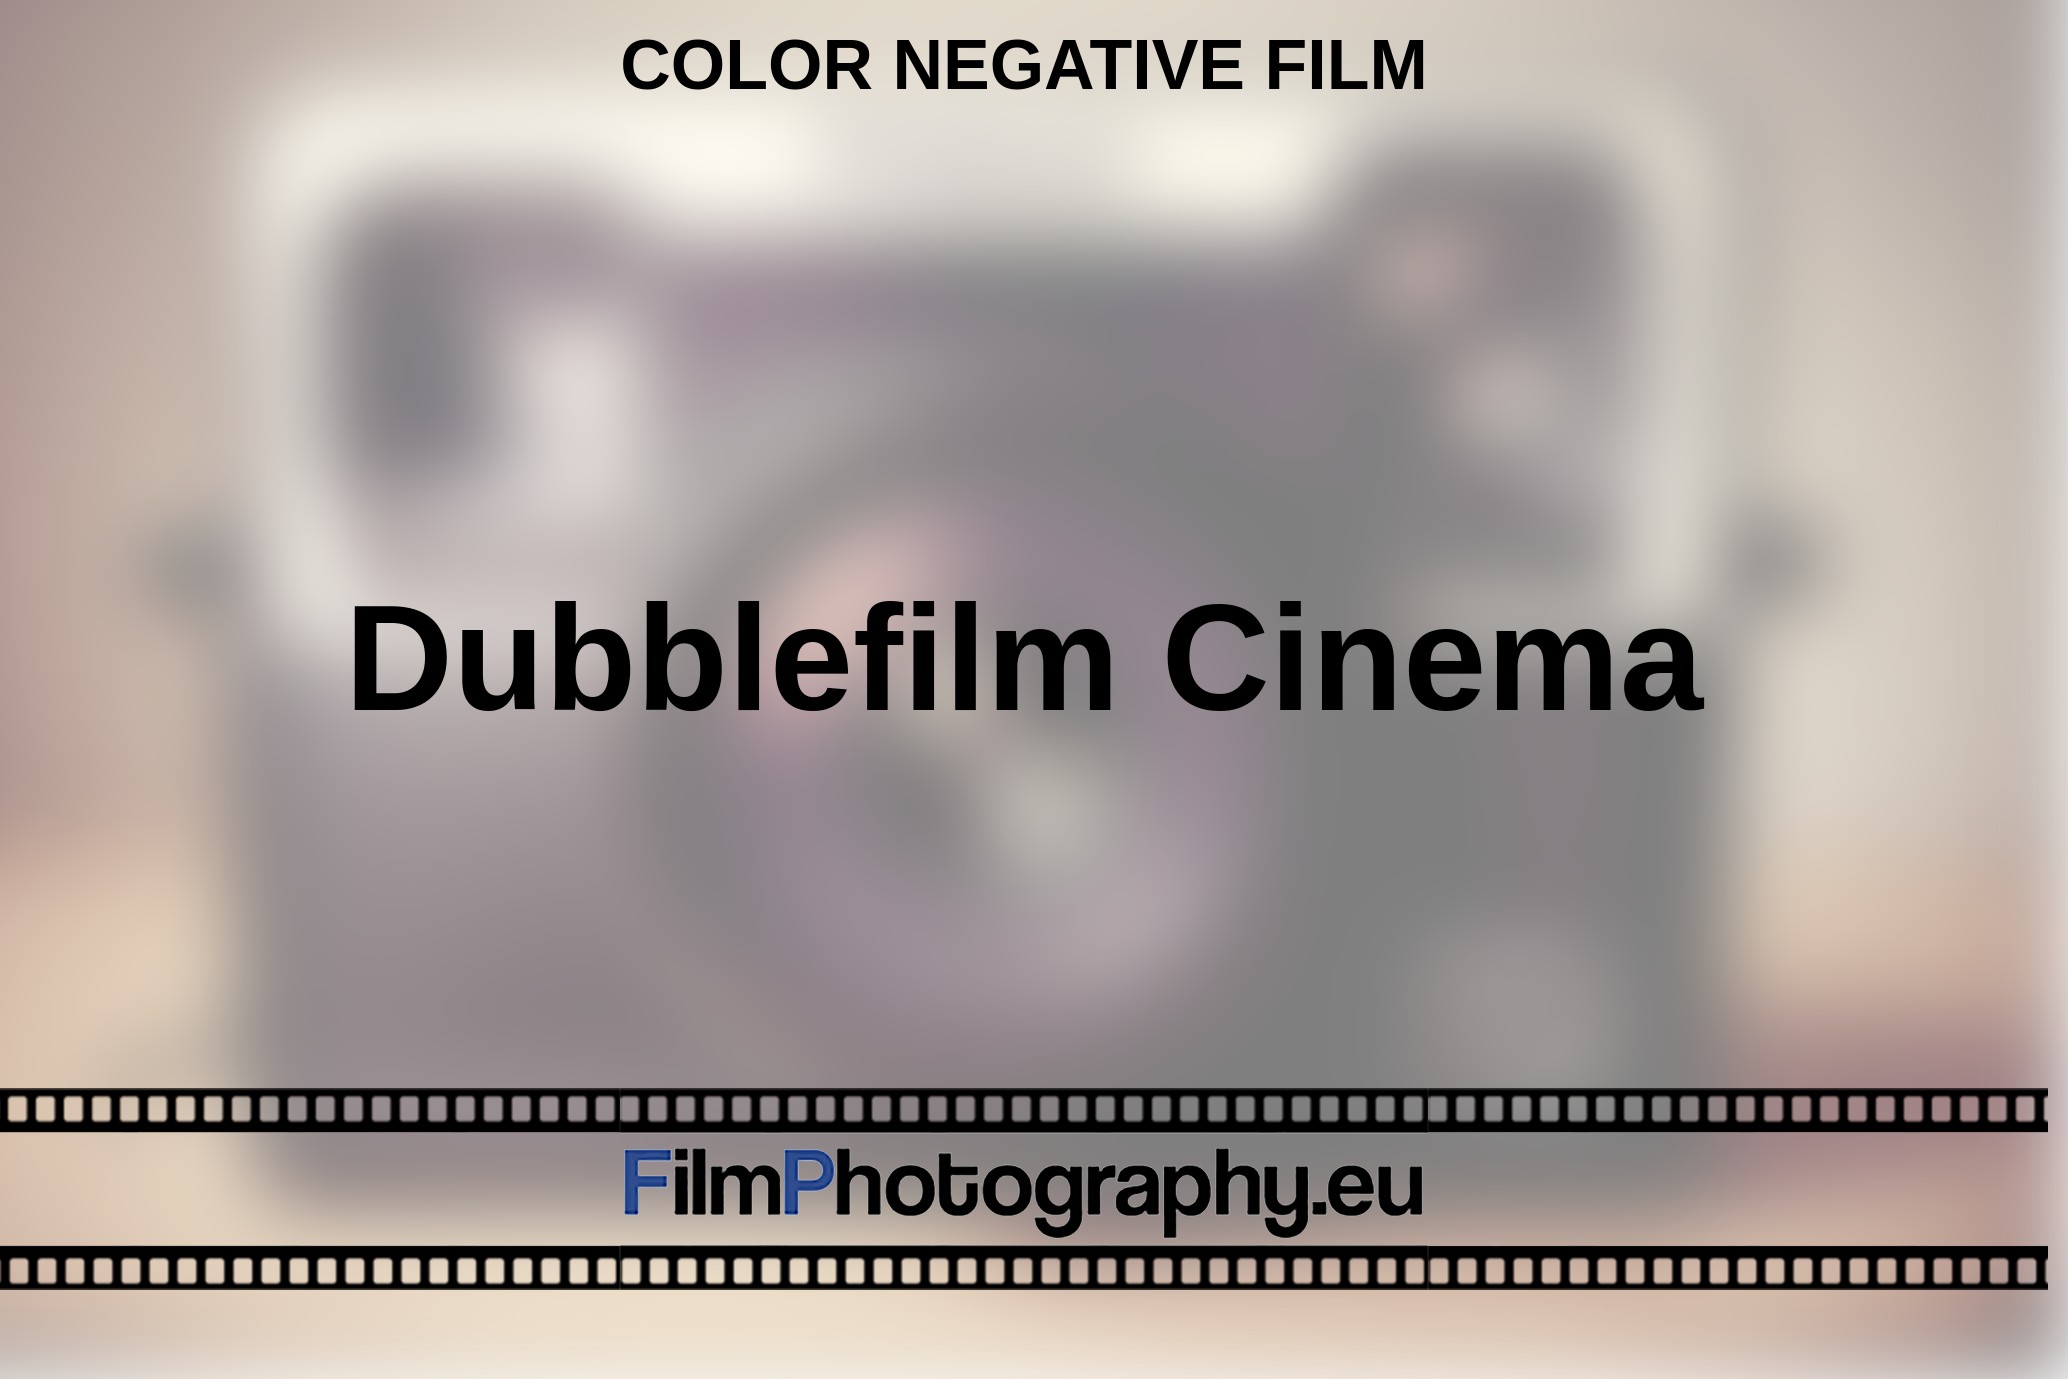 Dubblefilm-Cinema-Color-negative-film-bnv.jpg